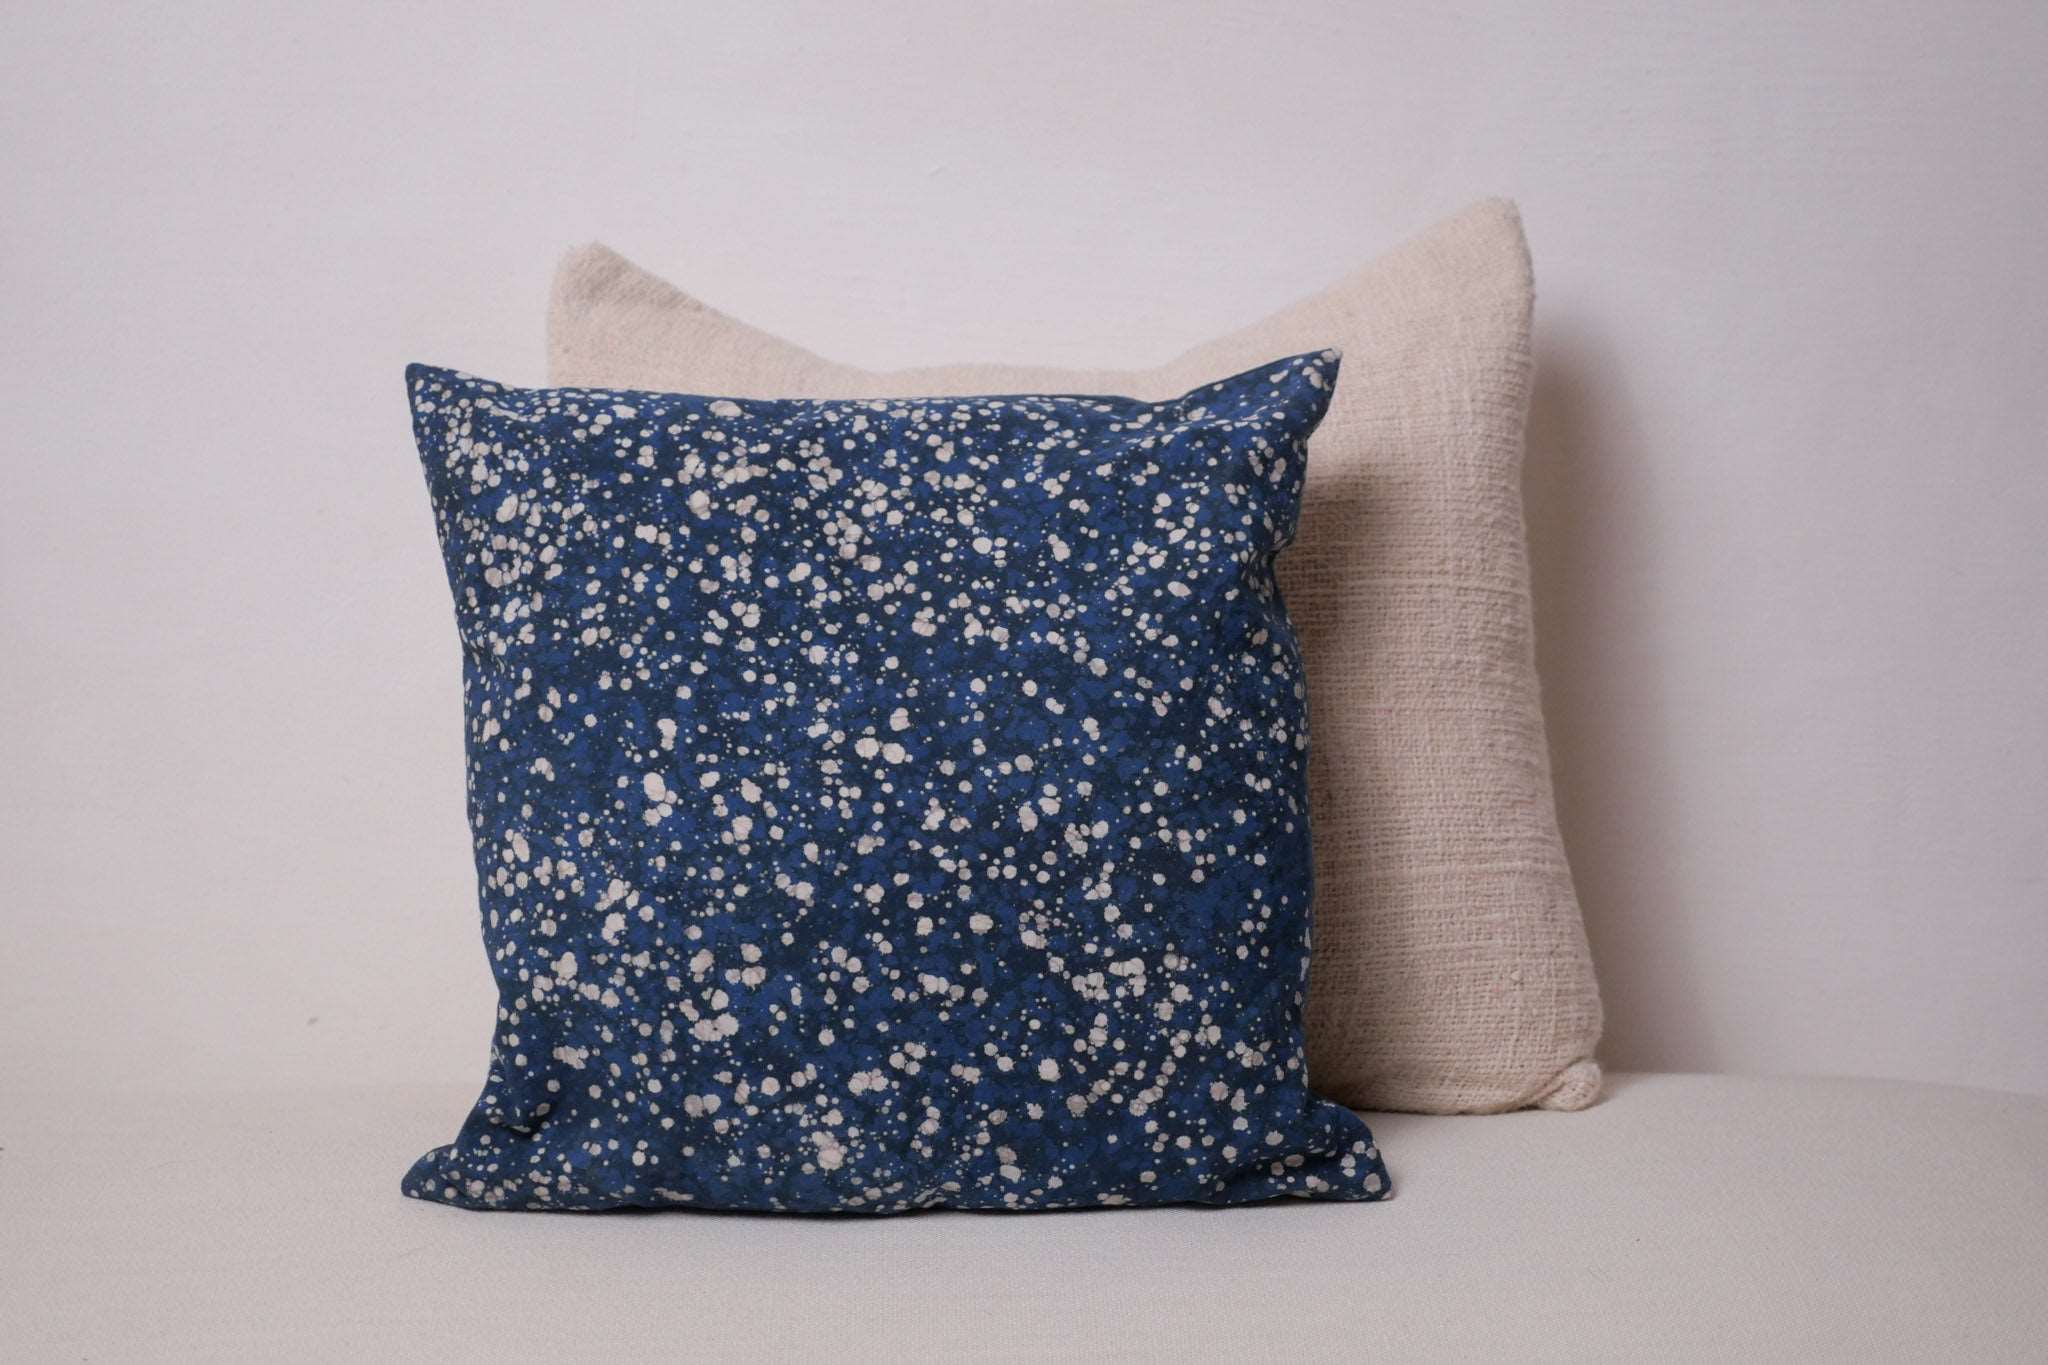 Naturally dyed indigo cushion cover, hand made in Bangladesh by a social enterprise.